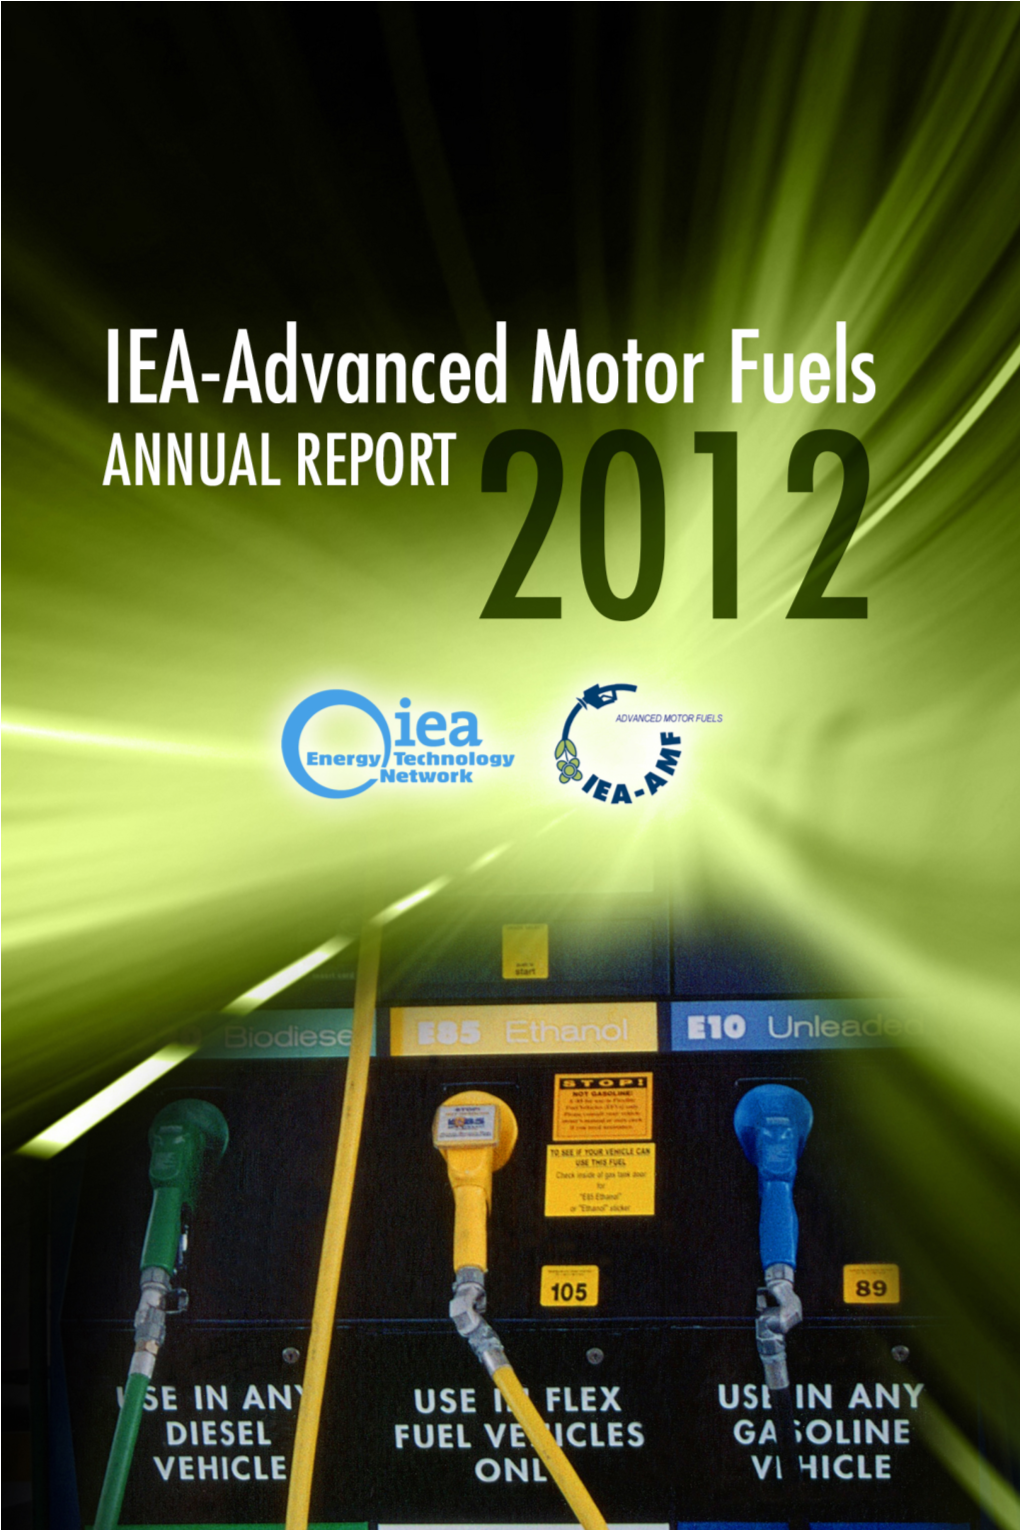 Iea-Advanced Motor Fuels Annual Report 2012